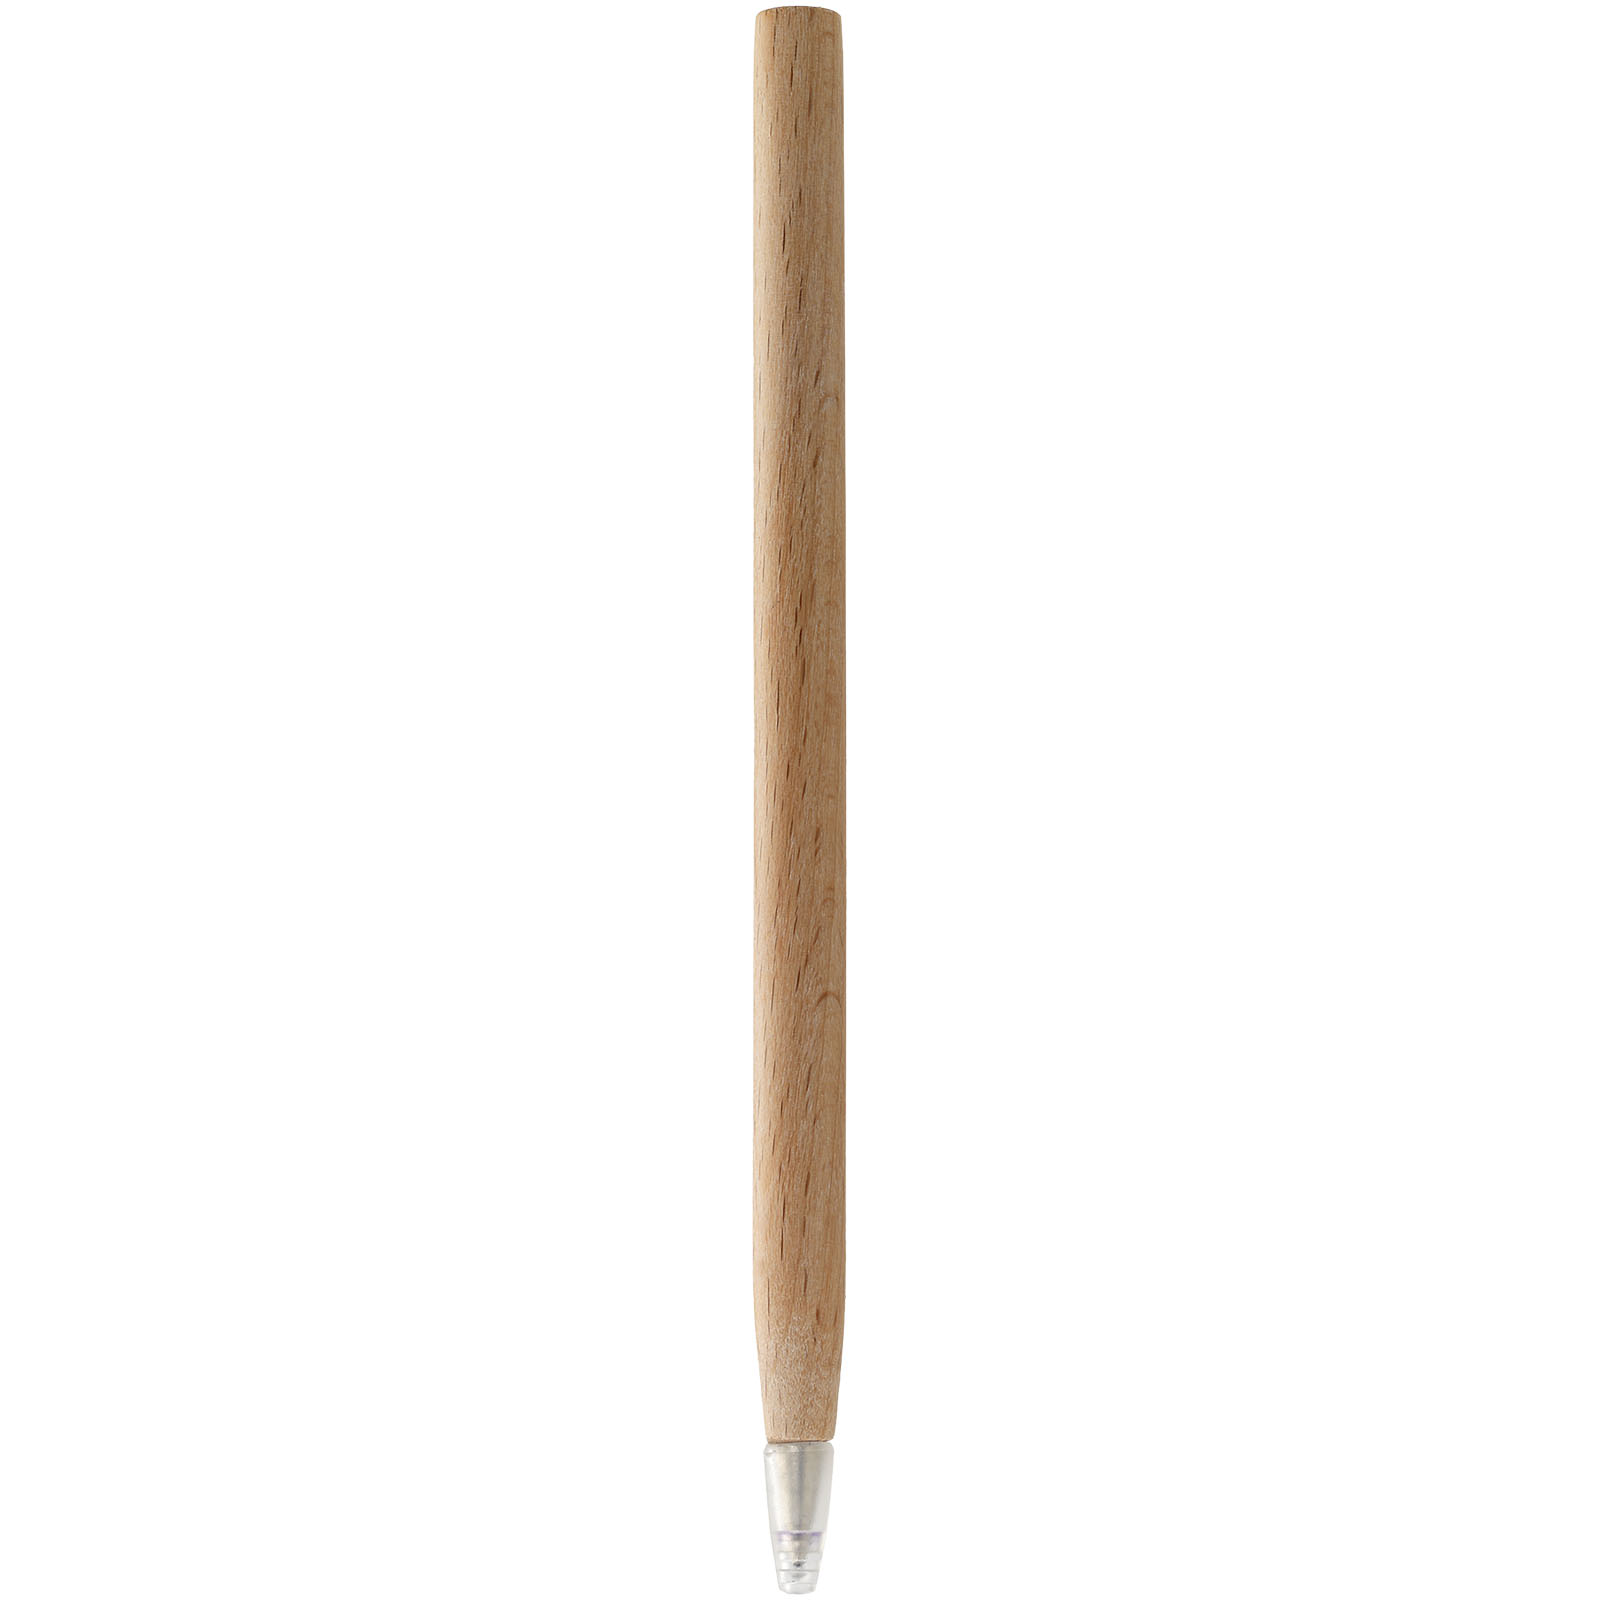 Advertising Ballpoint Pens - Arica wooden ballpoint pen